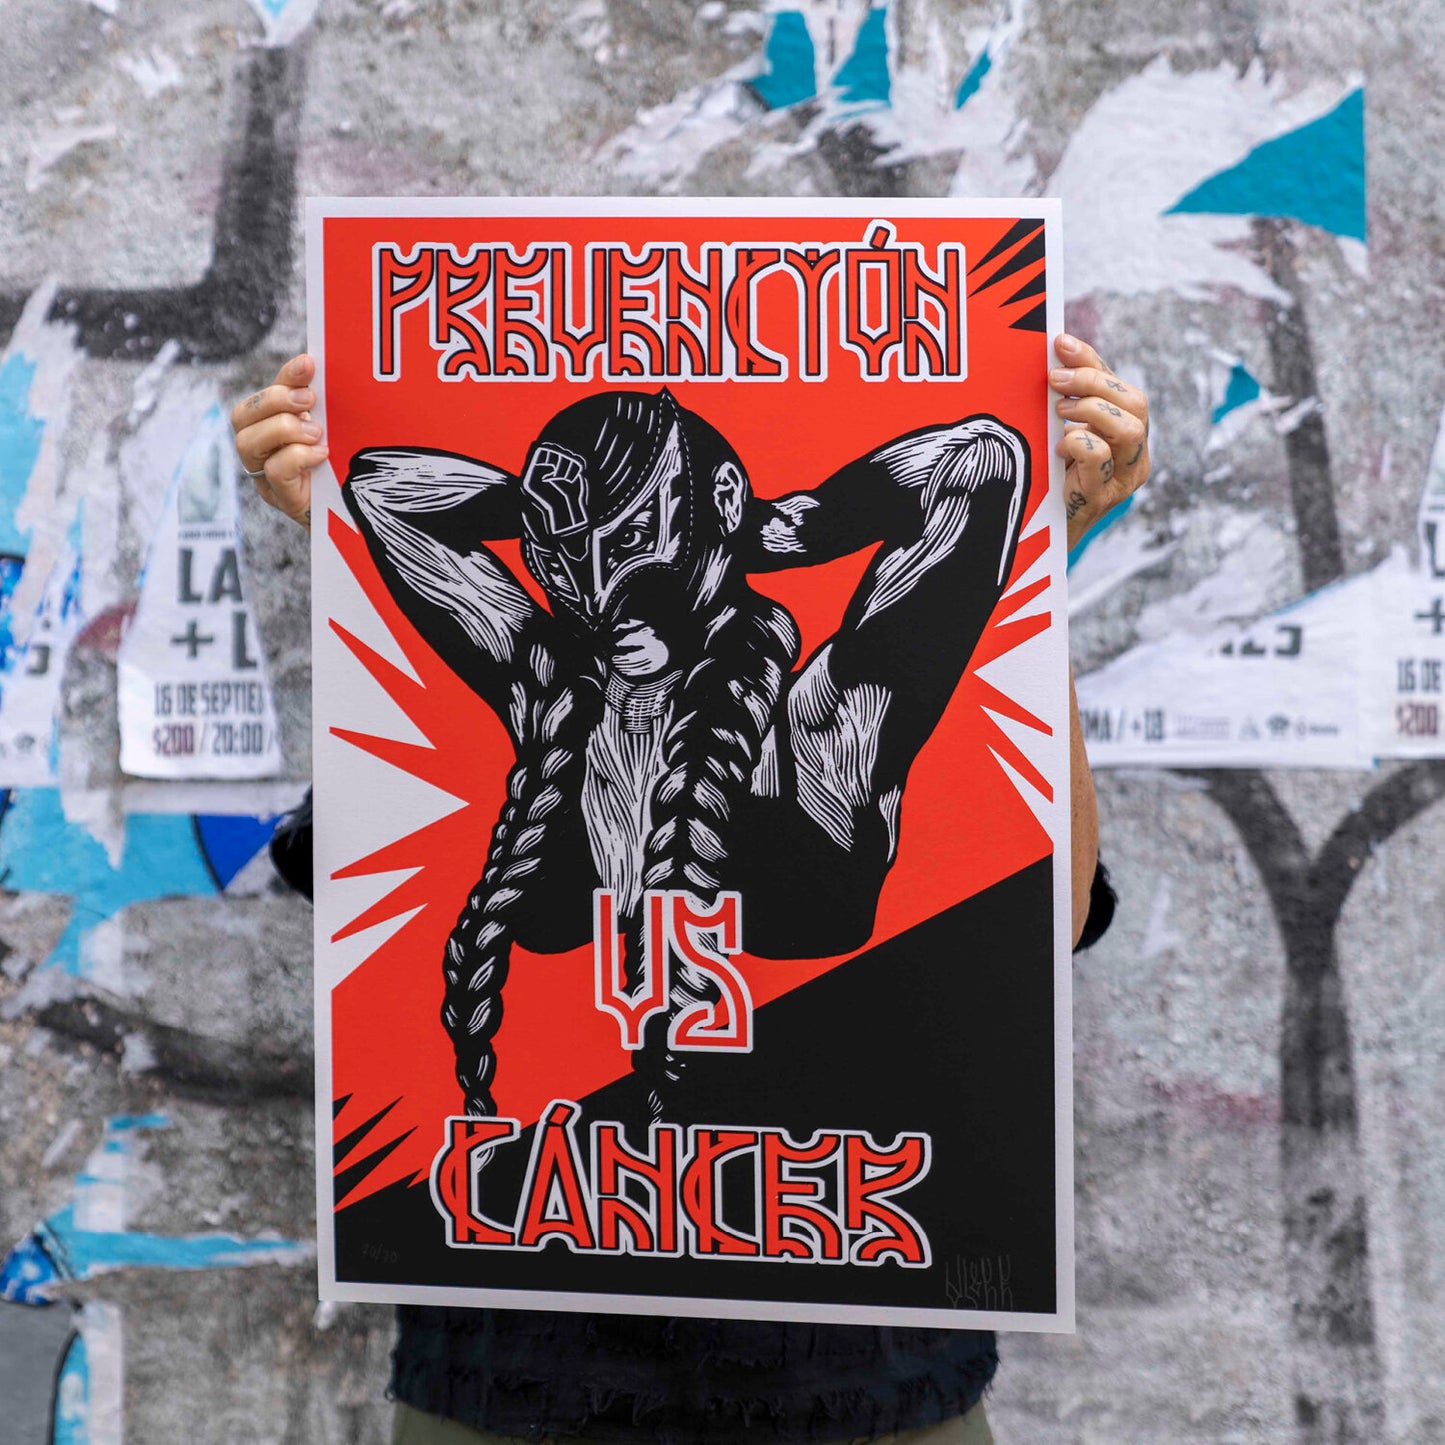 Poster: "Preventión VS Cancer" by Vlocke Negro